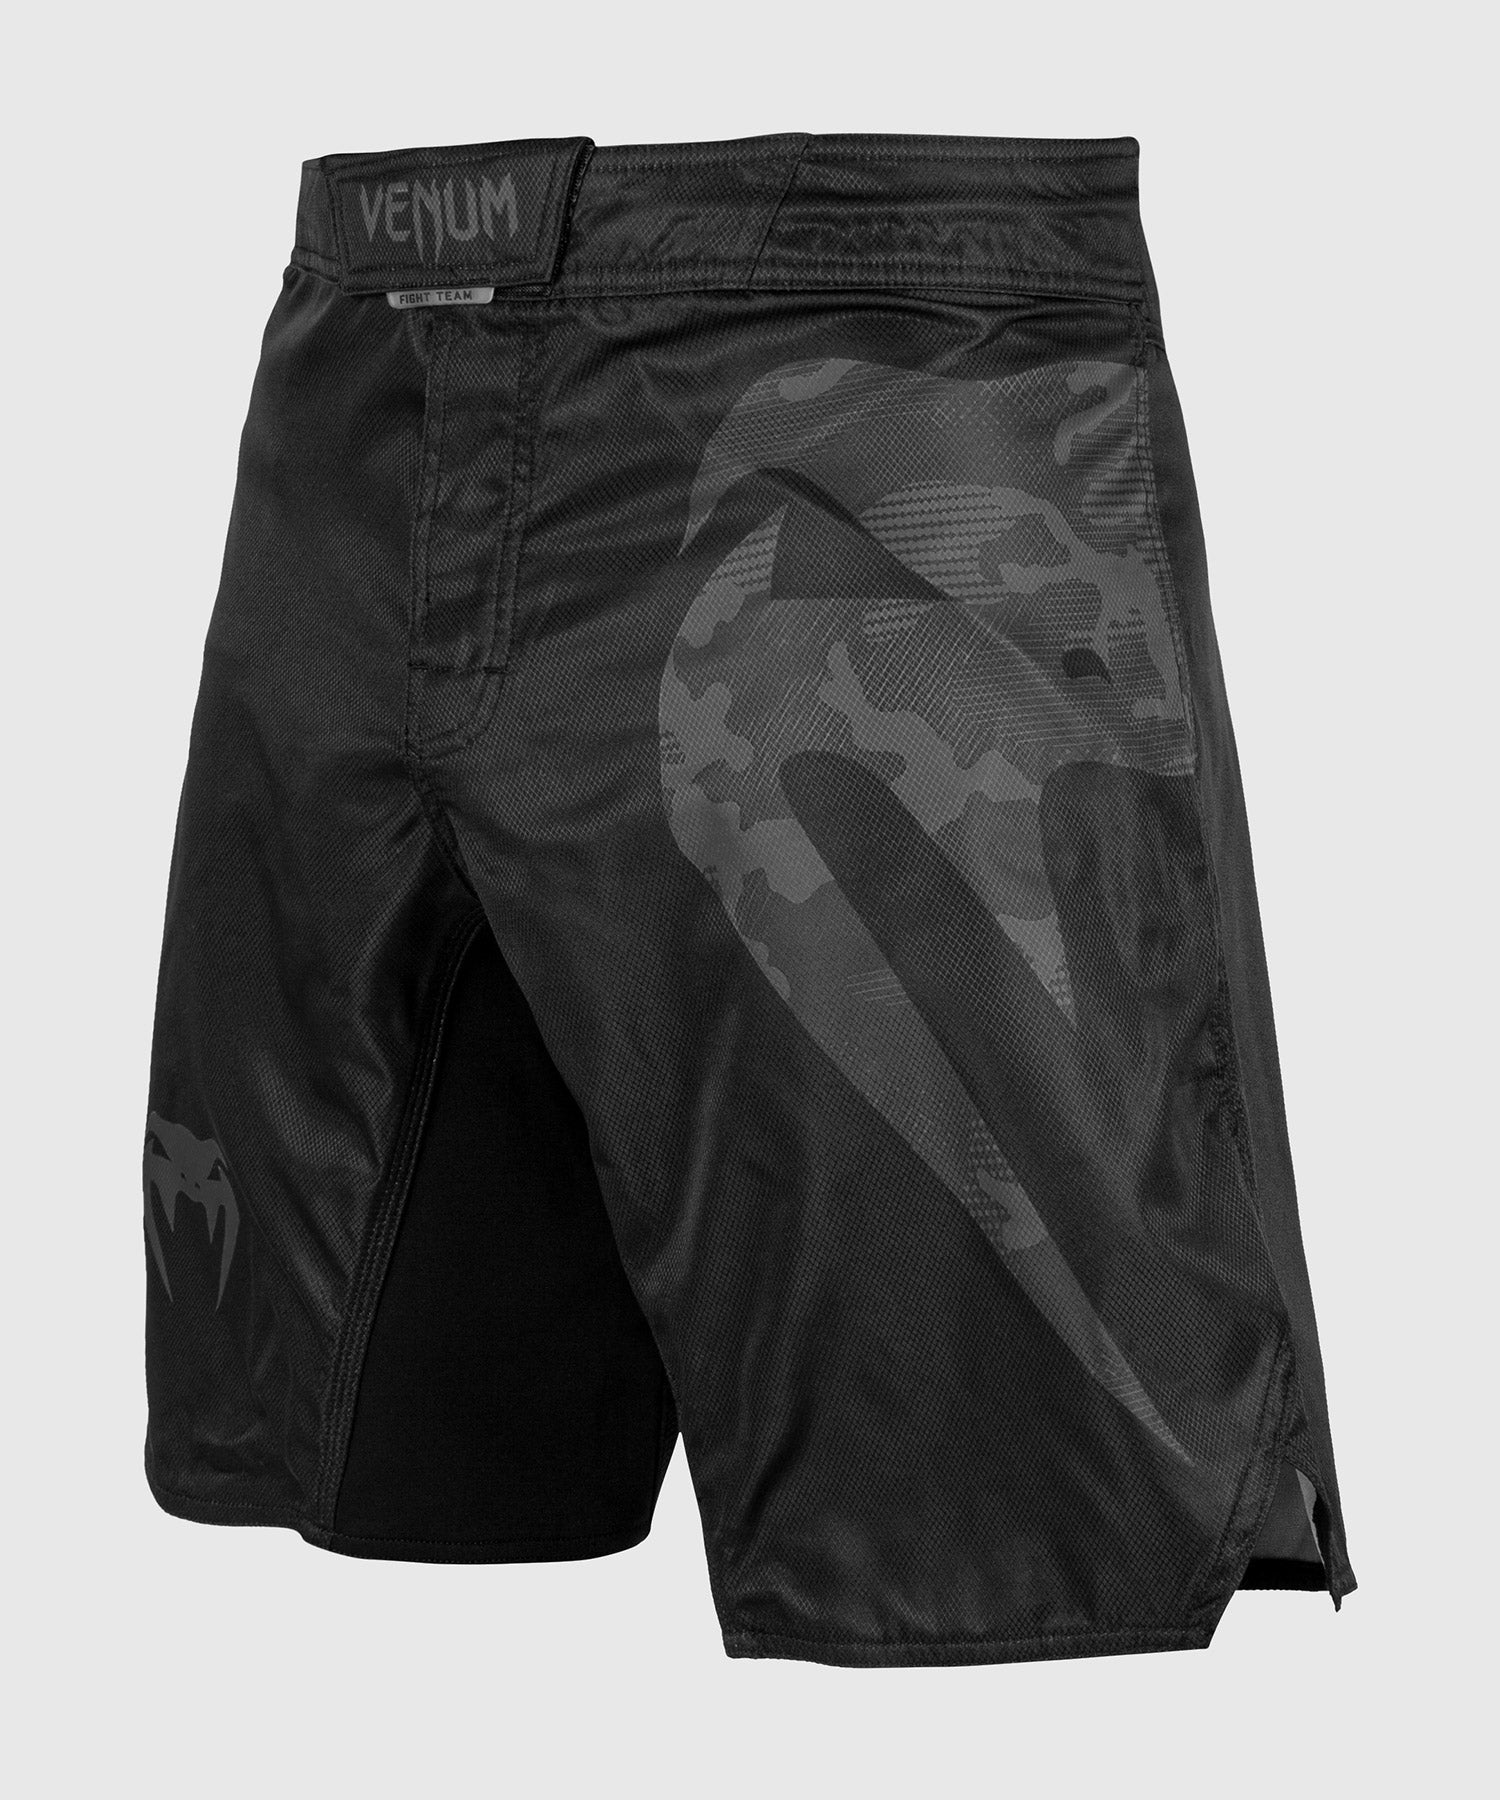 Pantalones MMA Venum Light 3.0 - Cortos - Negro/Blanco